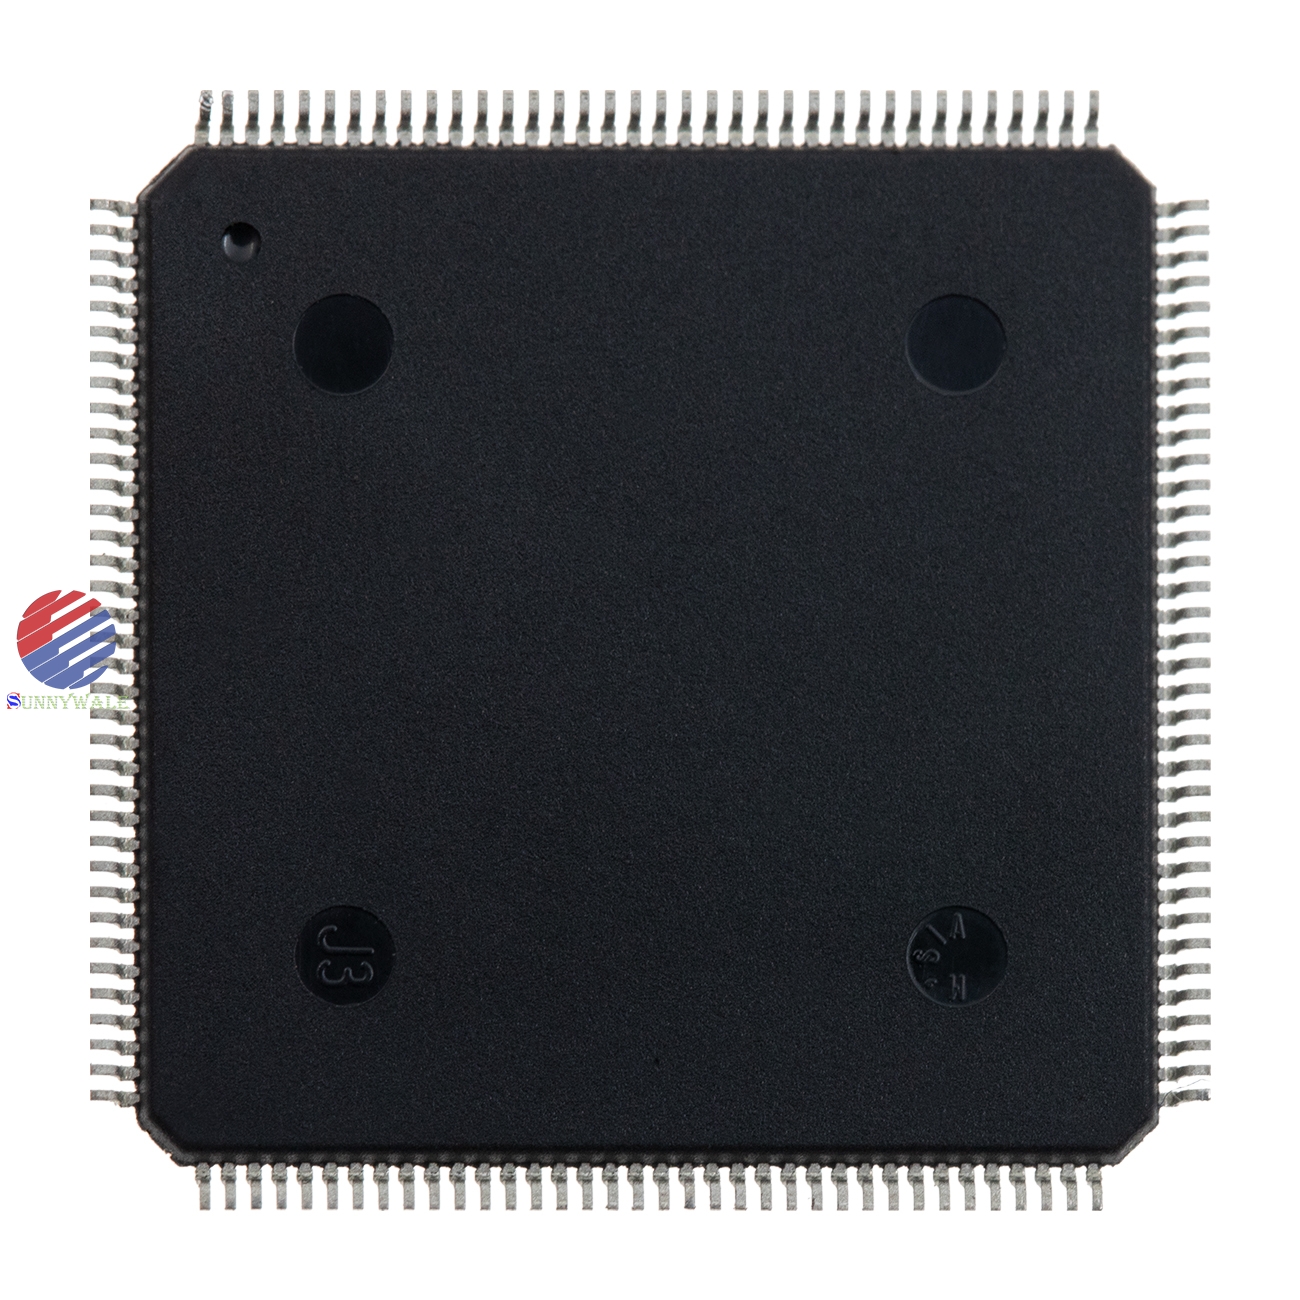 EP1C3T144C8N, ALTERA FPGA, ALTERA Cyclone FPGA, field programmable gate array, vehicle four-wheel locator camera FPGA